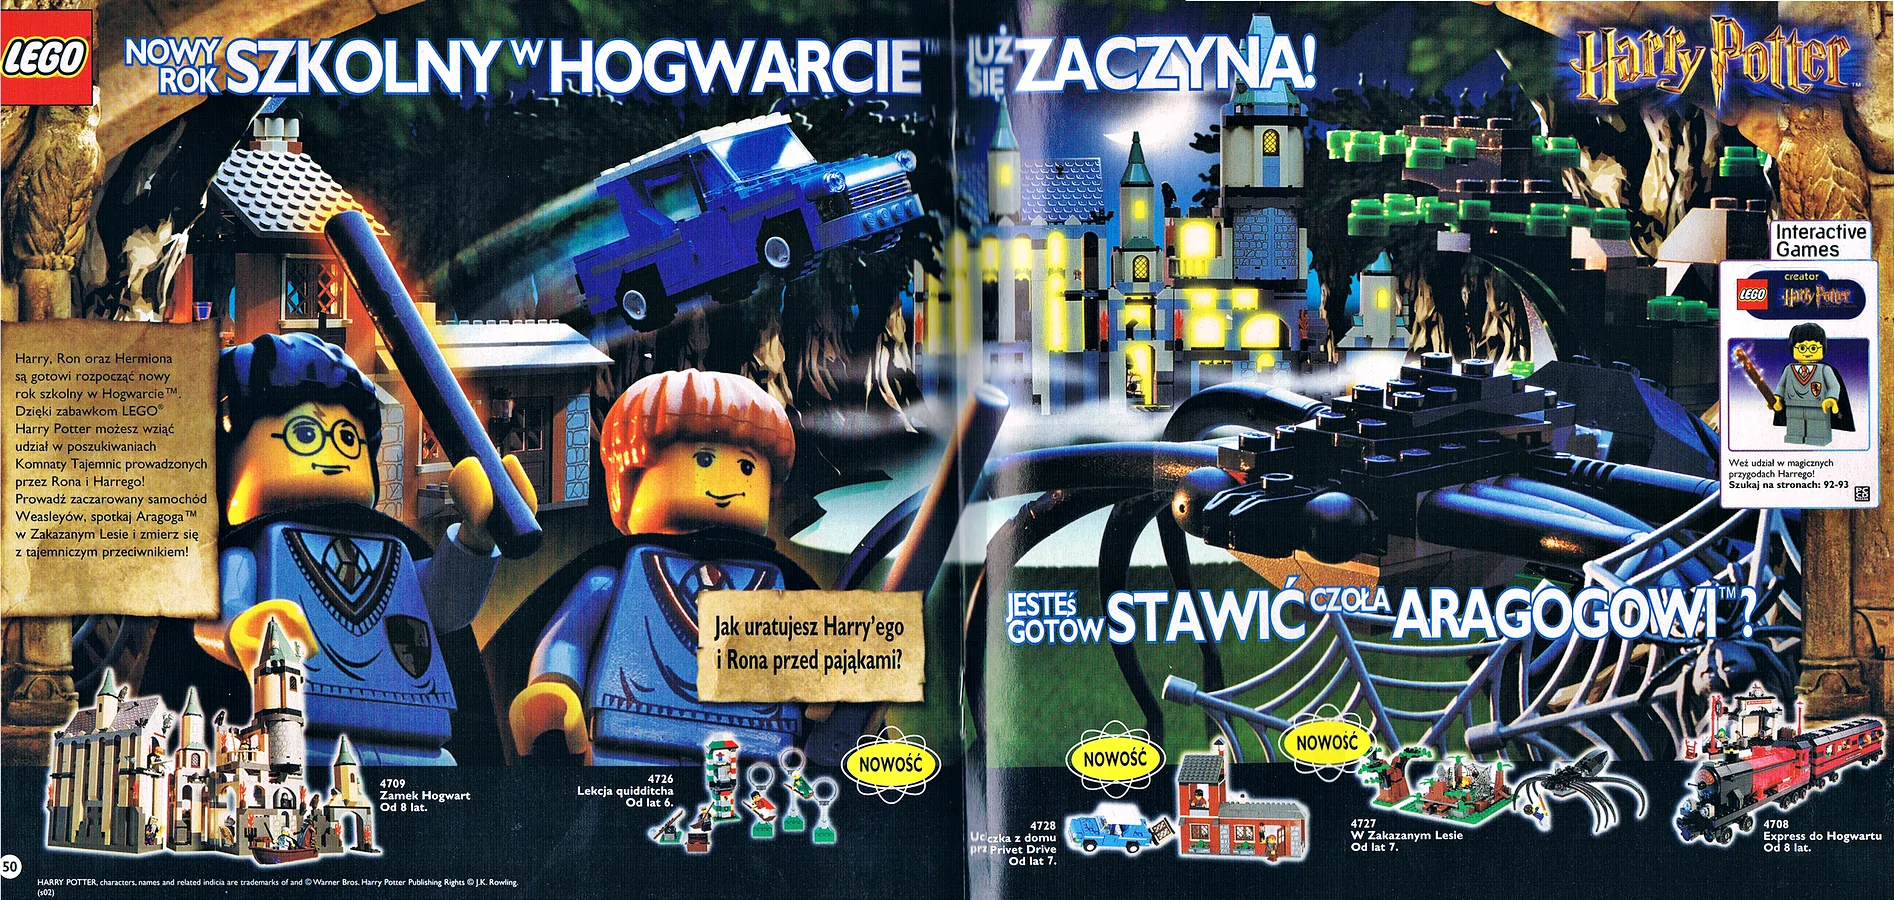 Katalog LEGO® z 2002 roku z zestawami z serii Harry Potter™